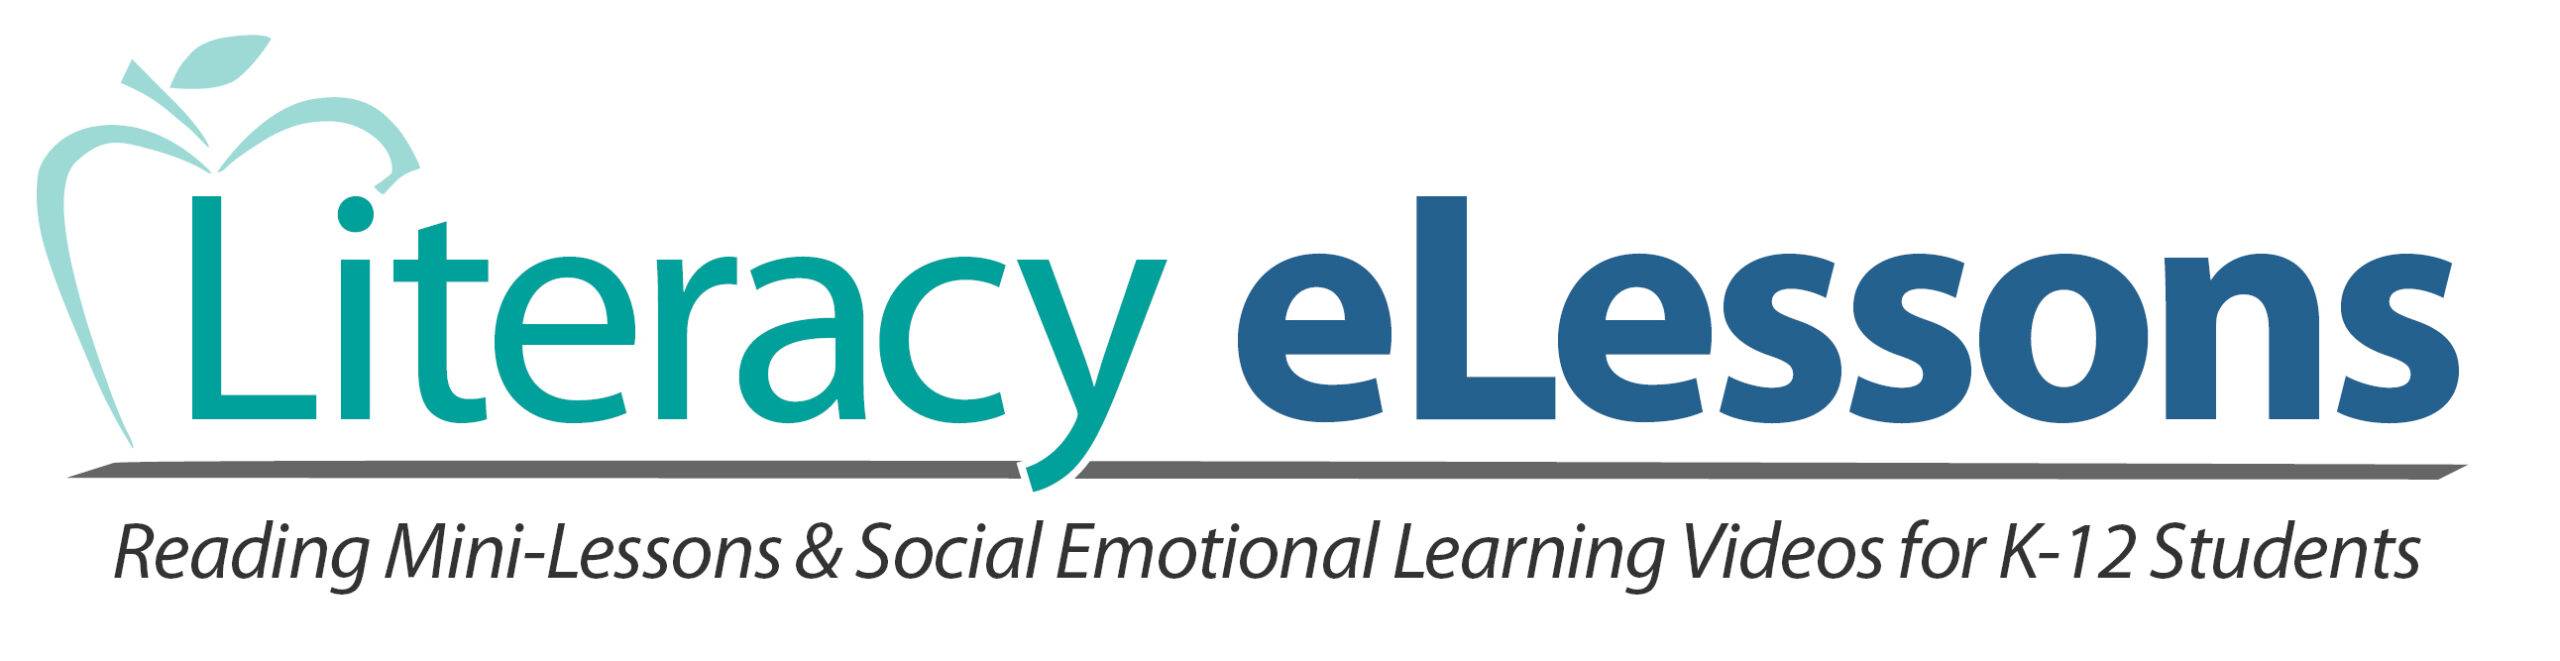 Literacy eLessons by Smekens Education